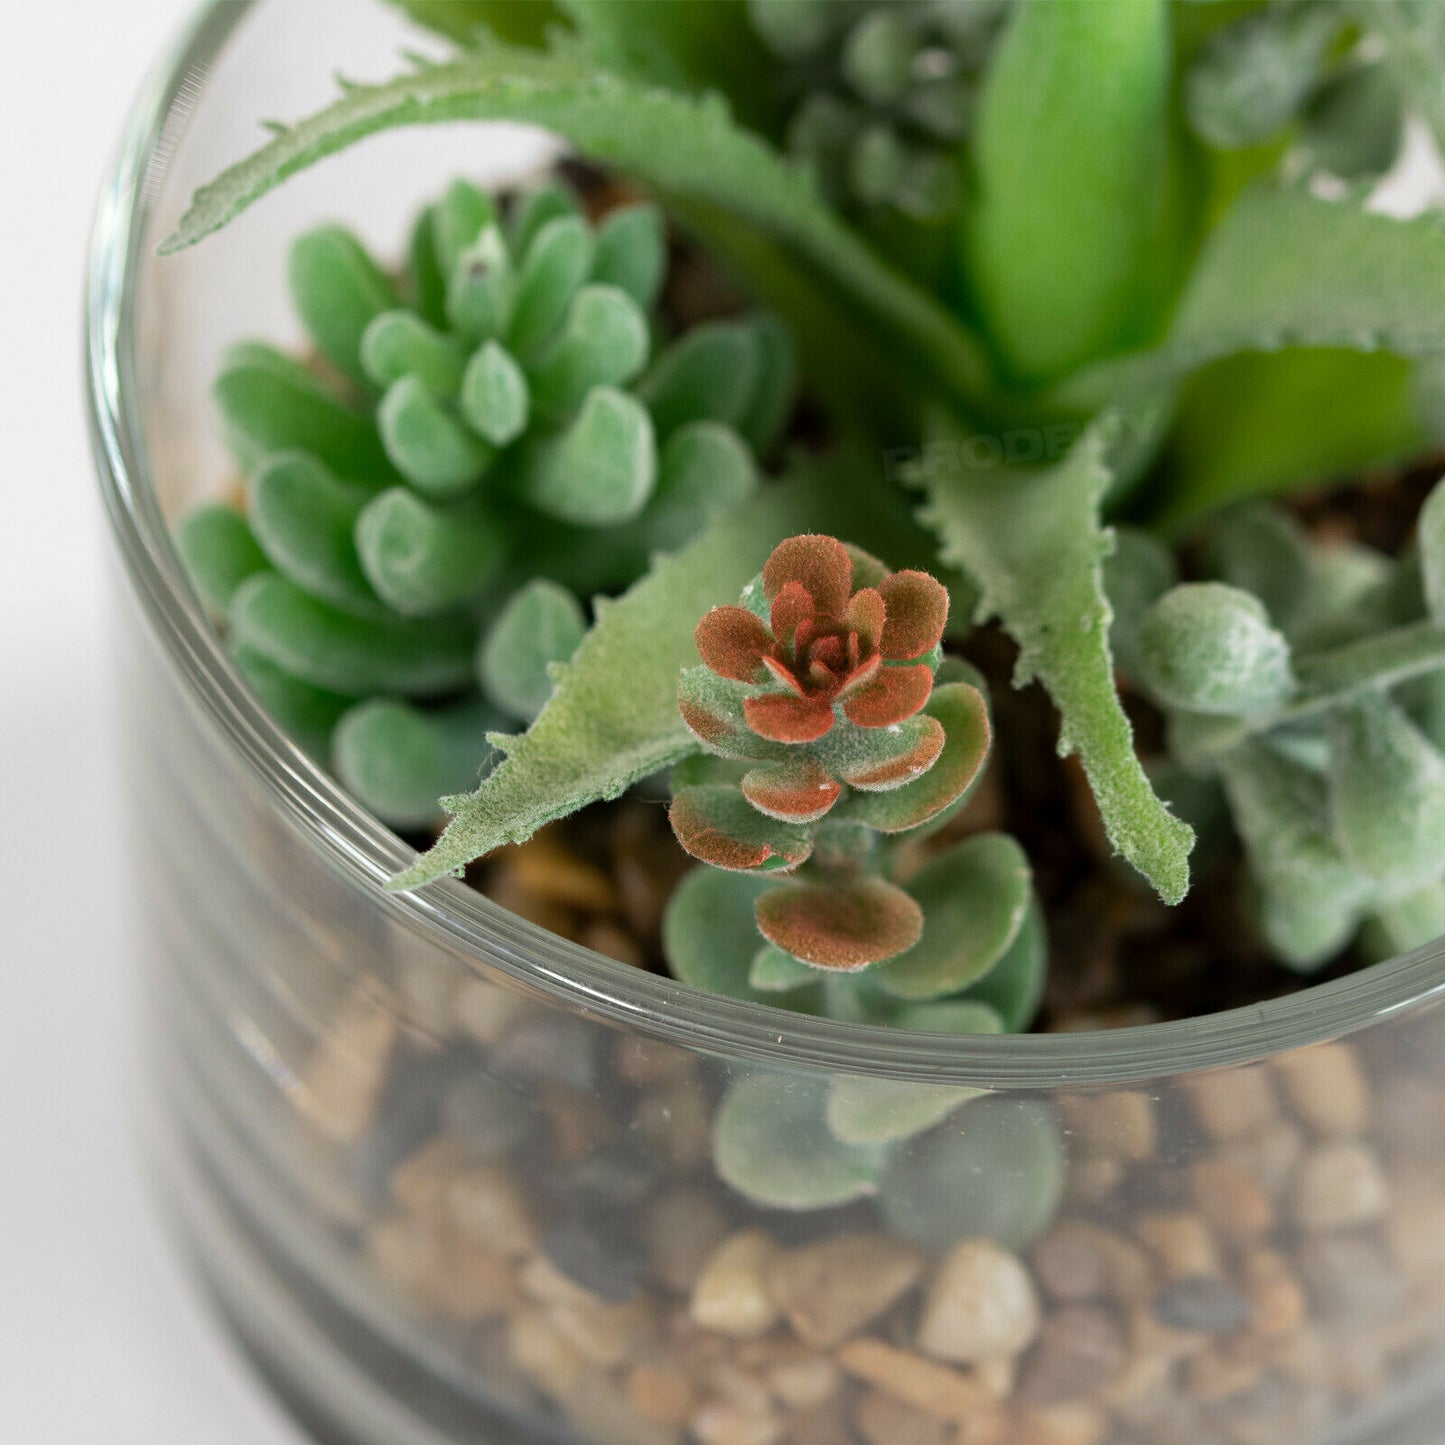 Small 11cm Artificial Succulent In Glass Pot